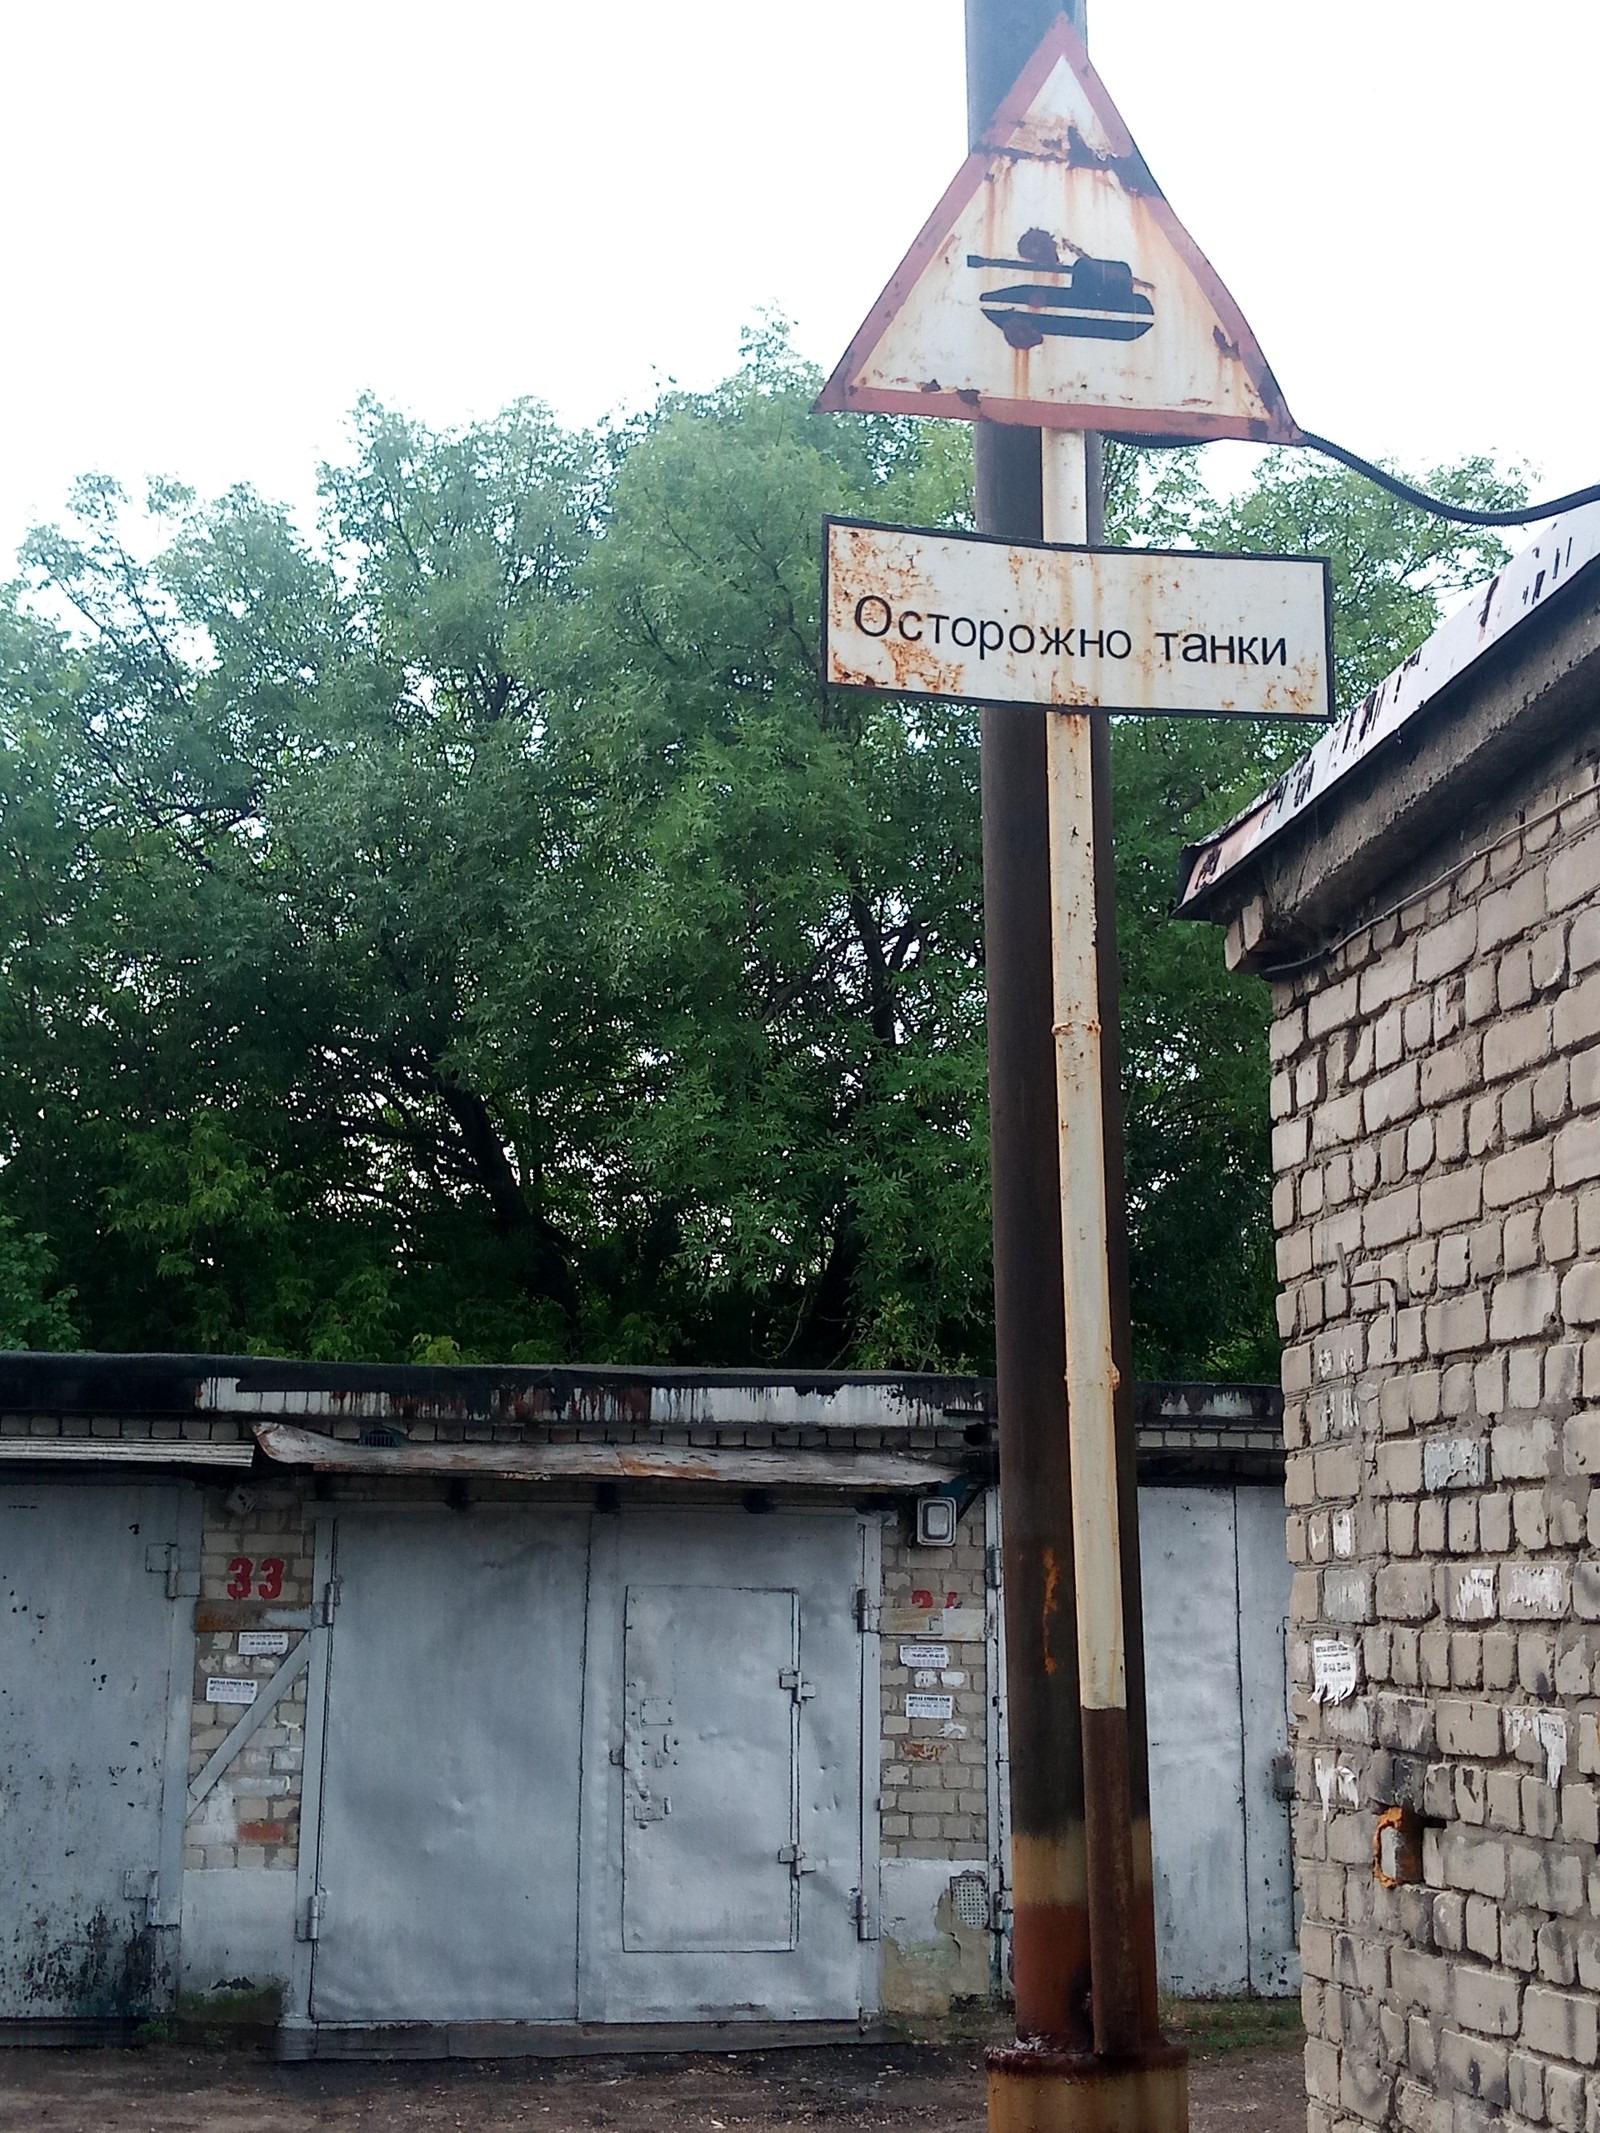 Harsh Saratov garages - Saratov, Russia, Garage, Signs, The photo